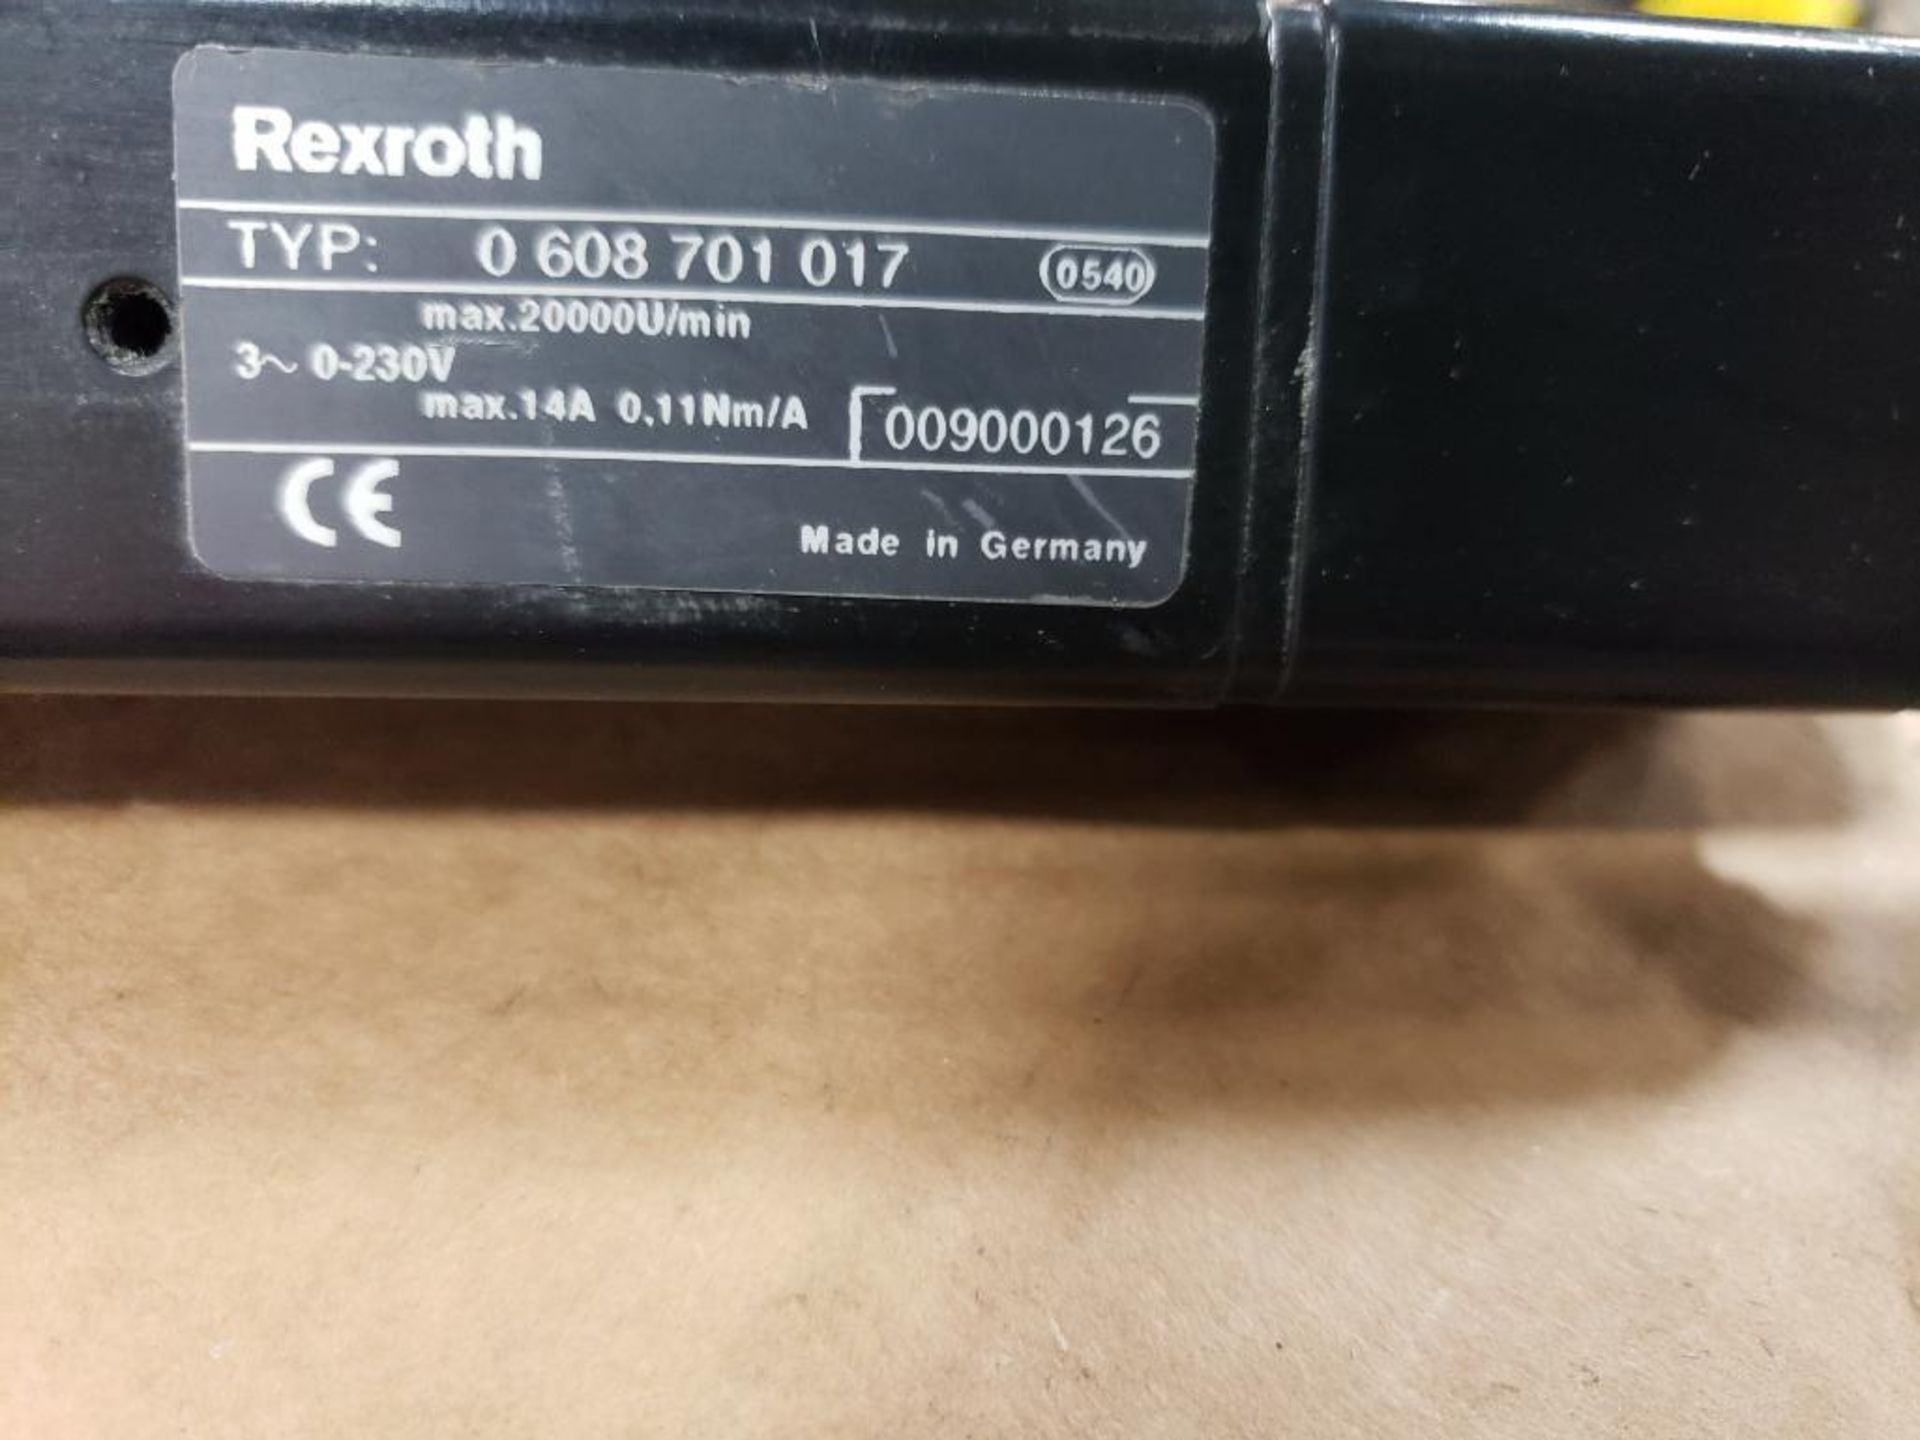 Rexroth 0-608-701-017 nutrunner. - Image 5 of 10